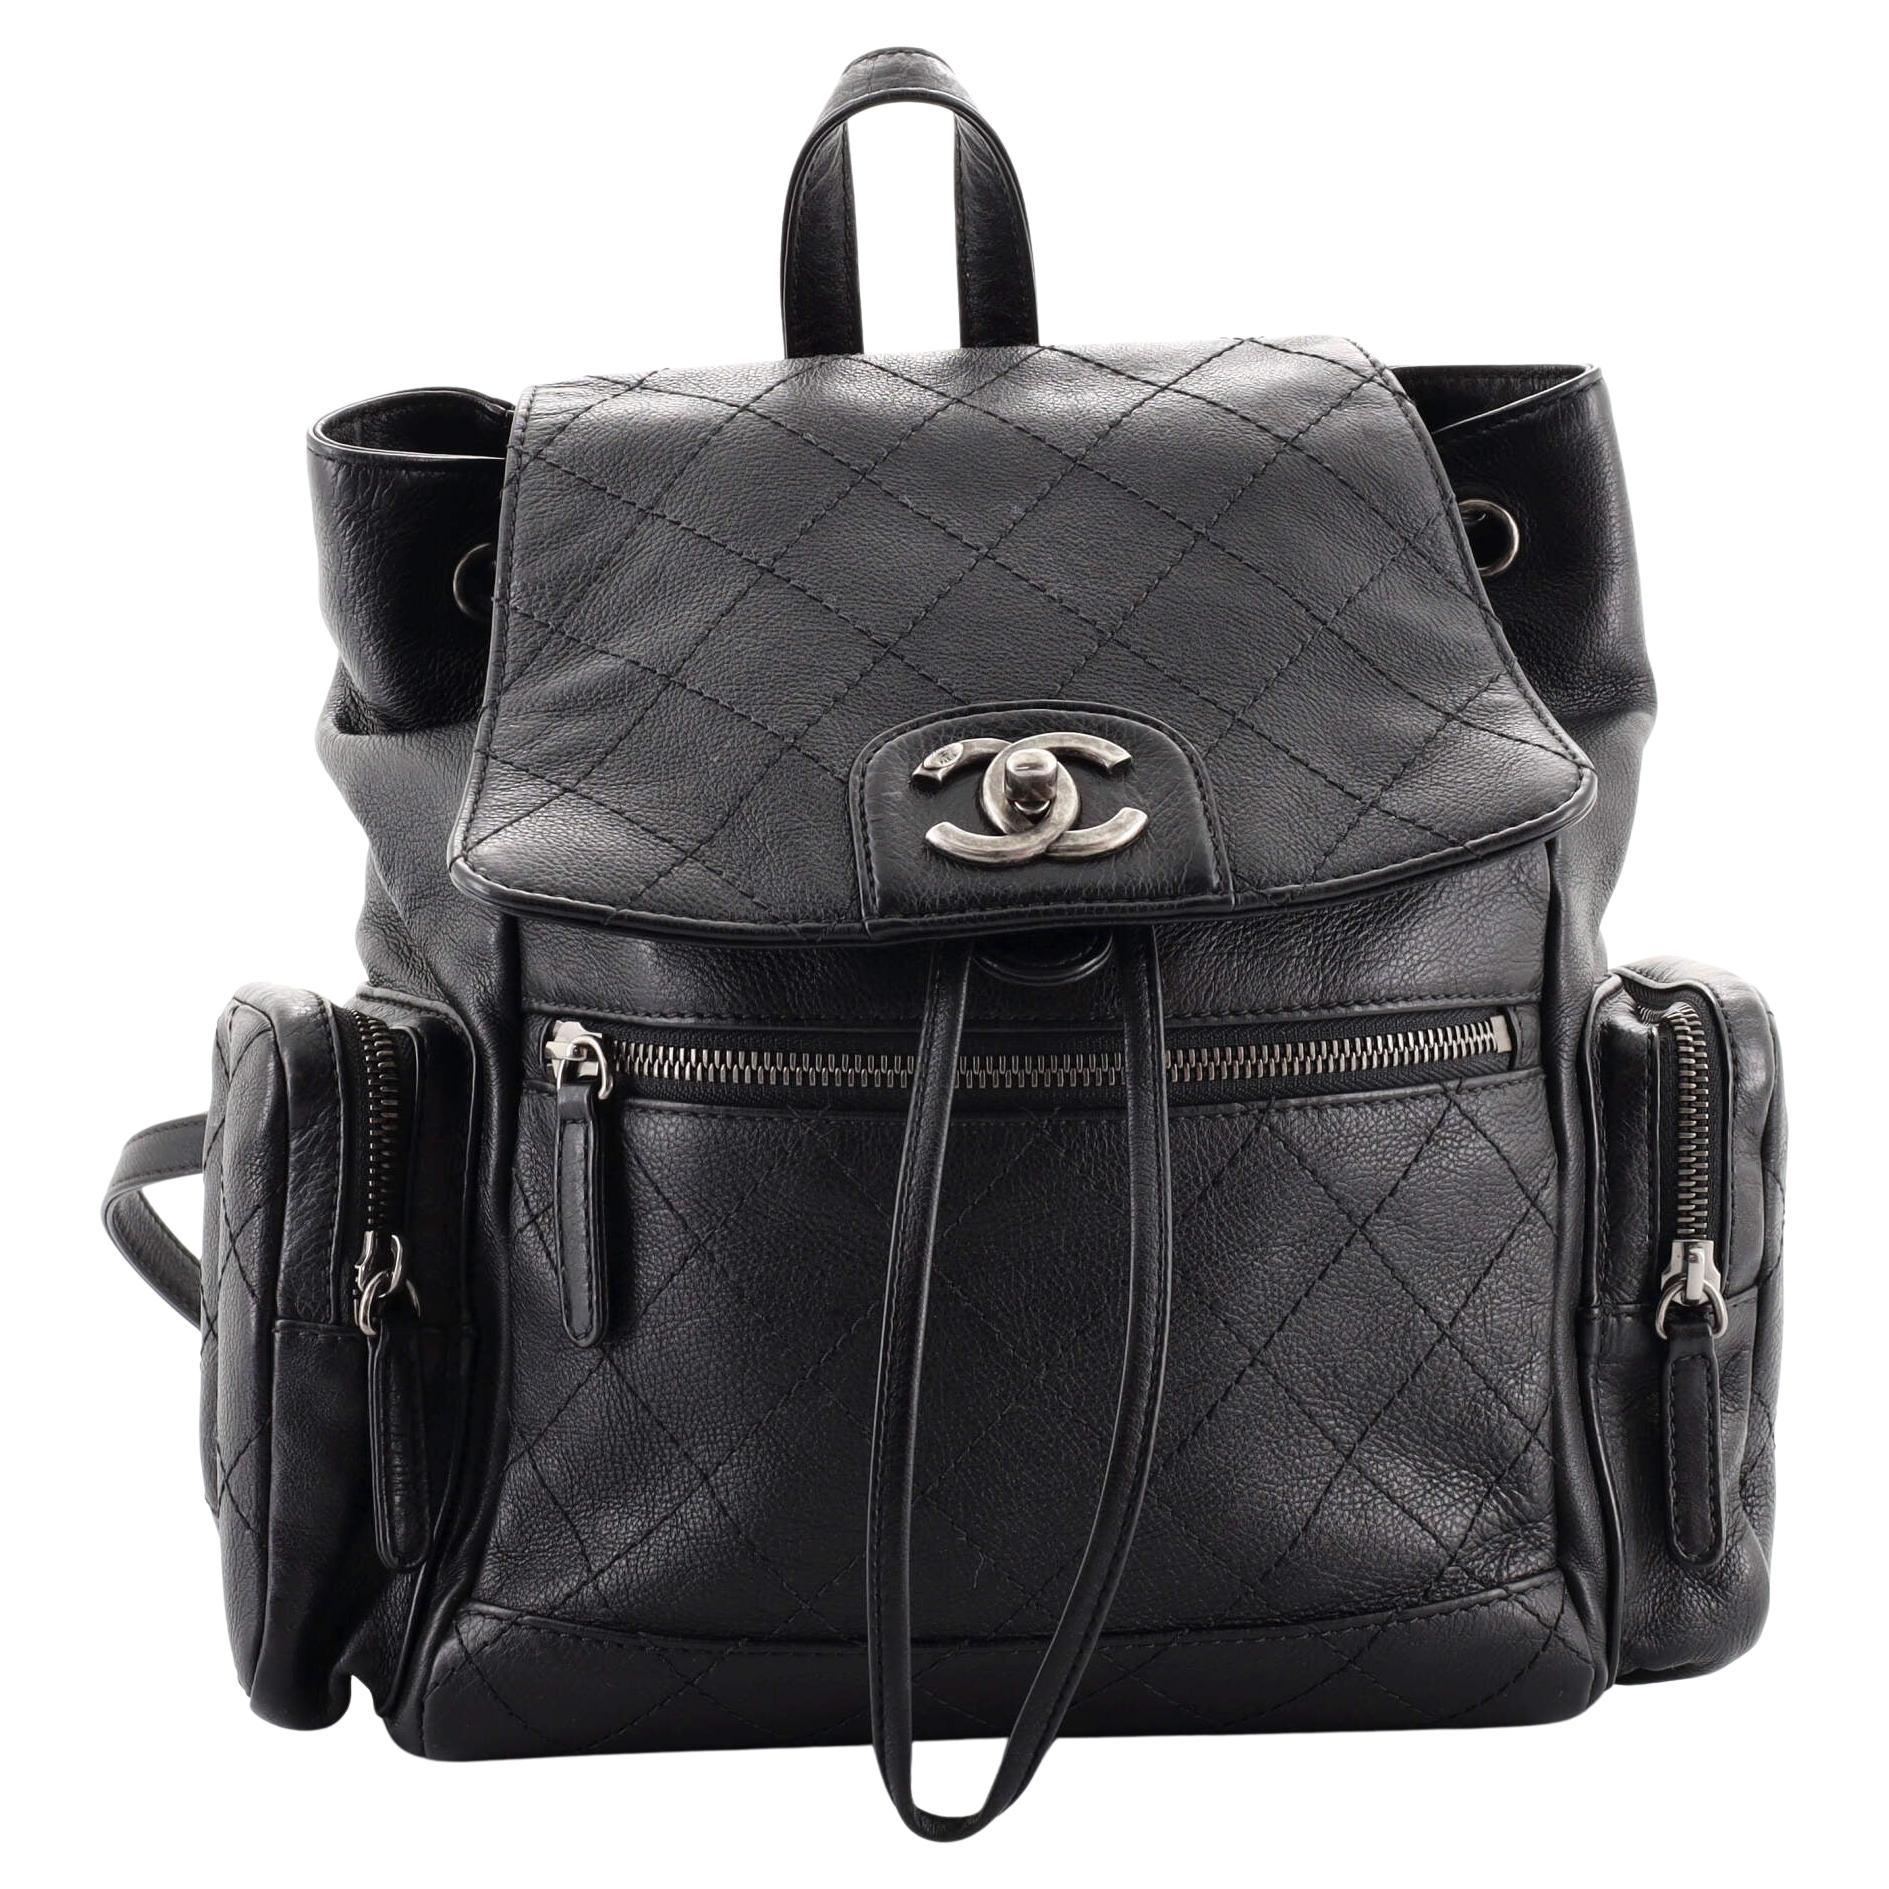 Chanel Cuba Pocket Backpack Stitched Calfskin Medium